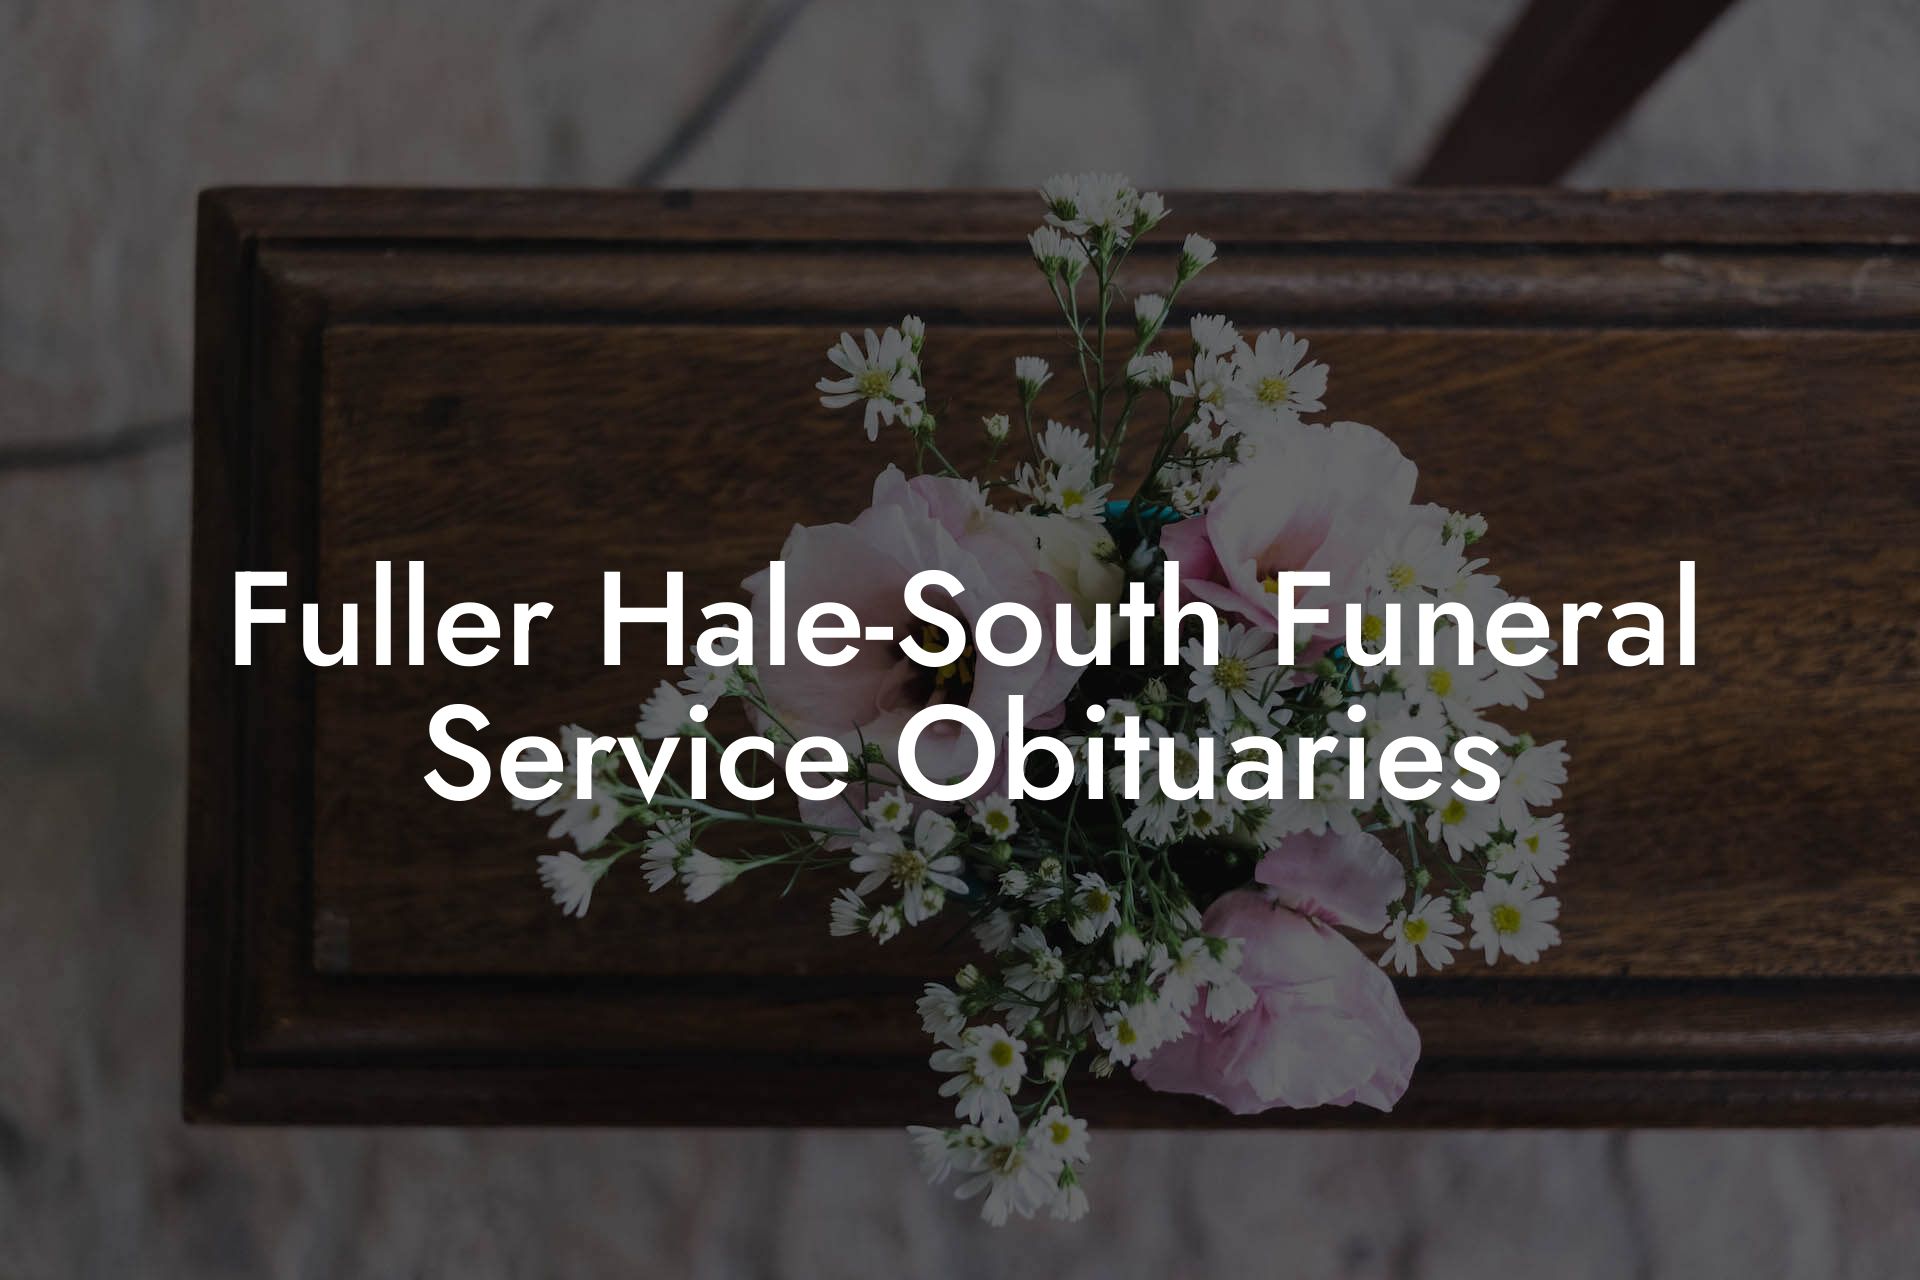 Fuller Hale-South Funeral Service Obituaries